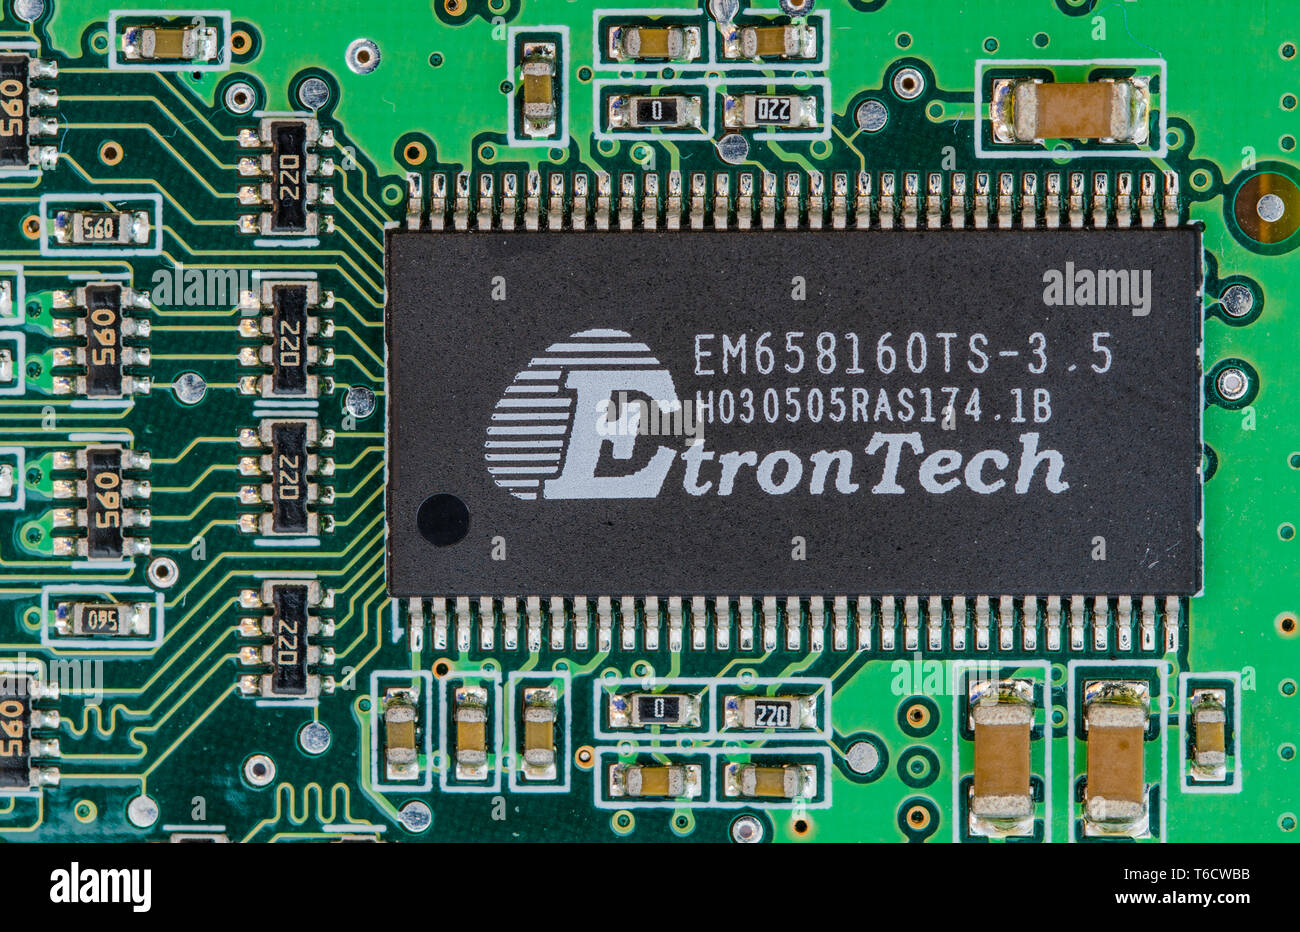 Dual en línea (DIP o DIL) paquete de tecnología de montaje superficial (SMT) EtronTech chip montado en un PCB. Placa de circuitos electrónicos closeup macro. Foto de stock